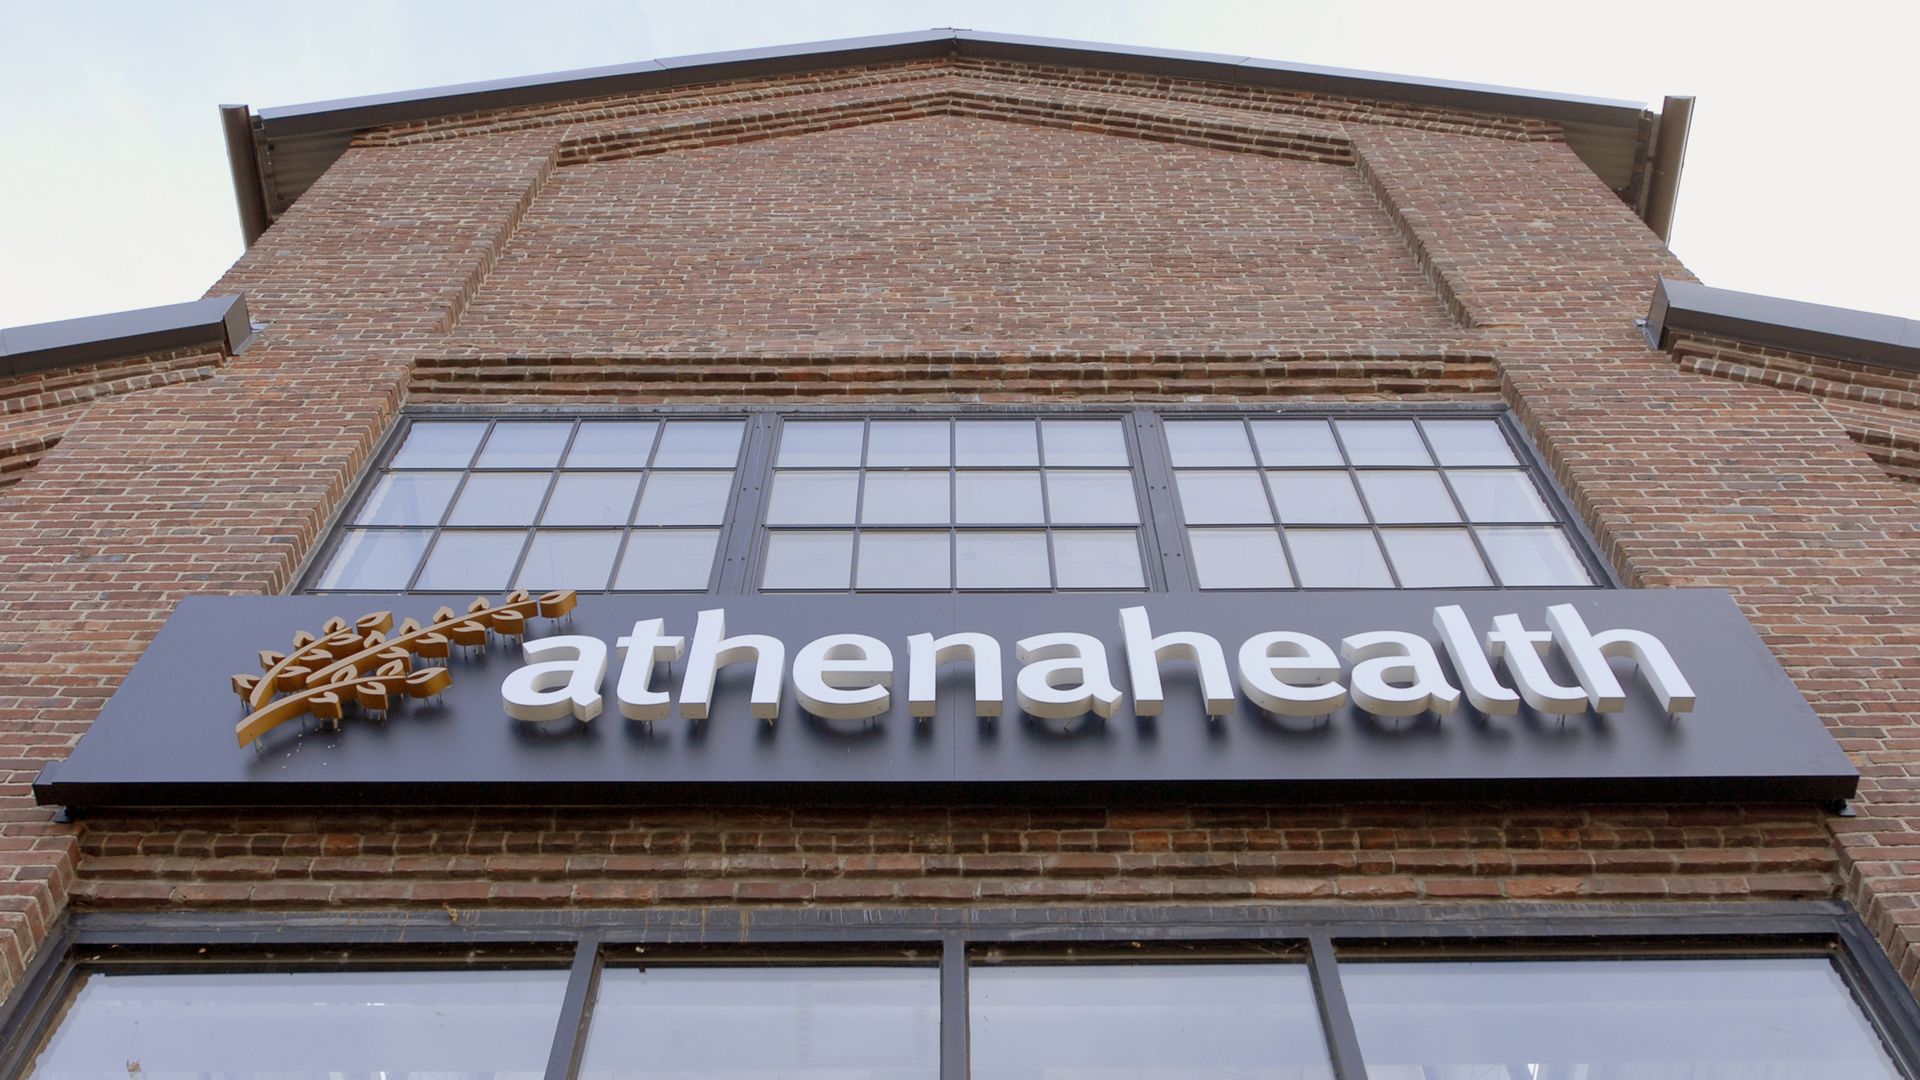 Athenahealth headquarters building in Massachusetts.